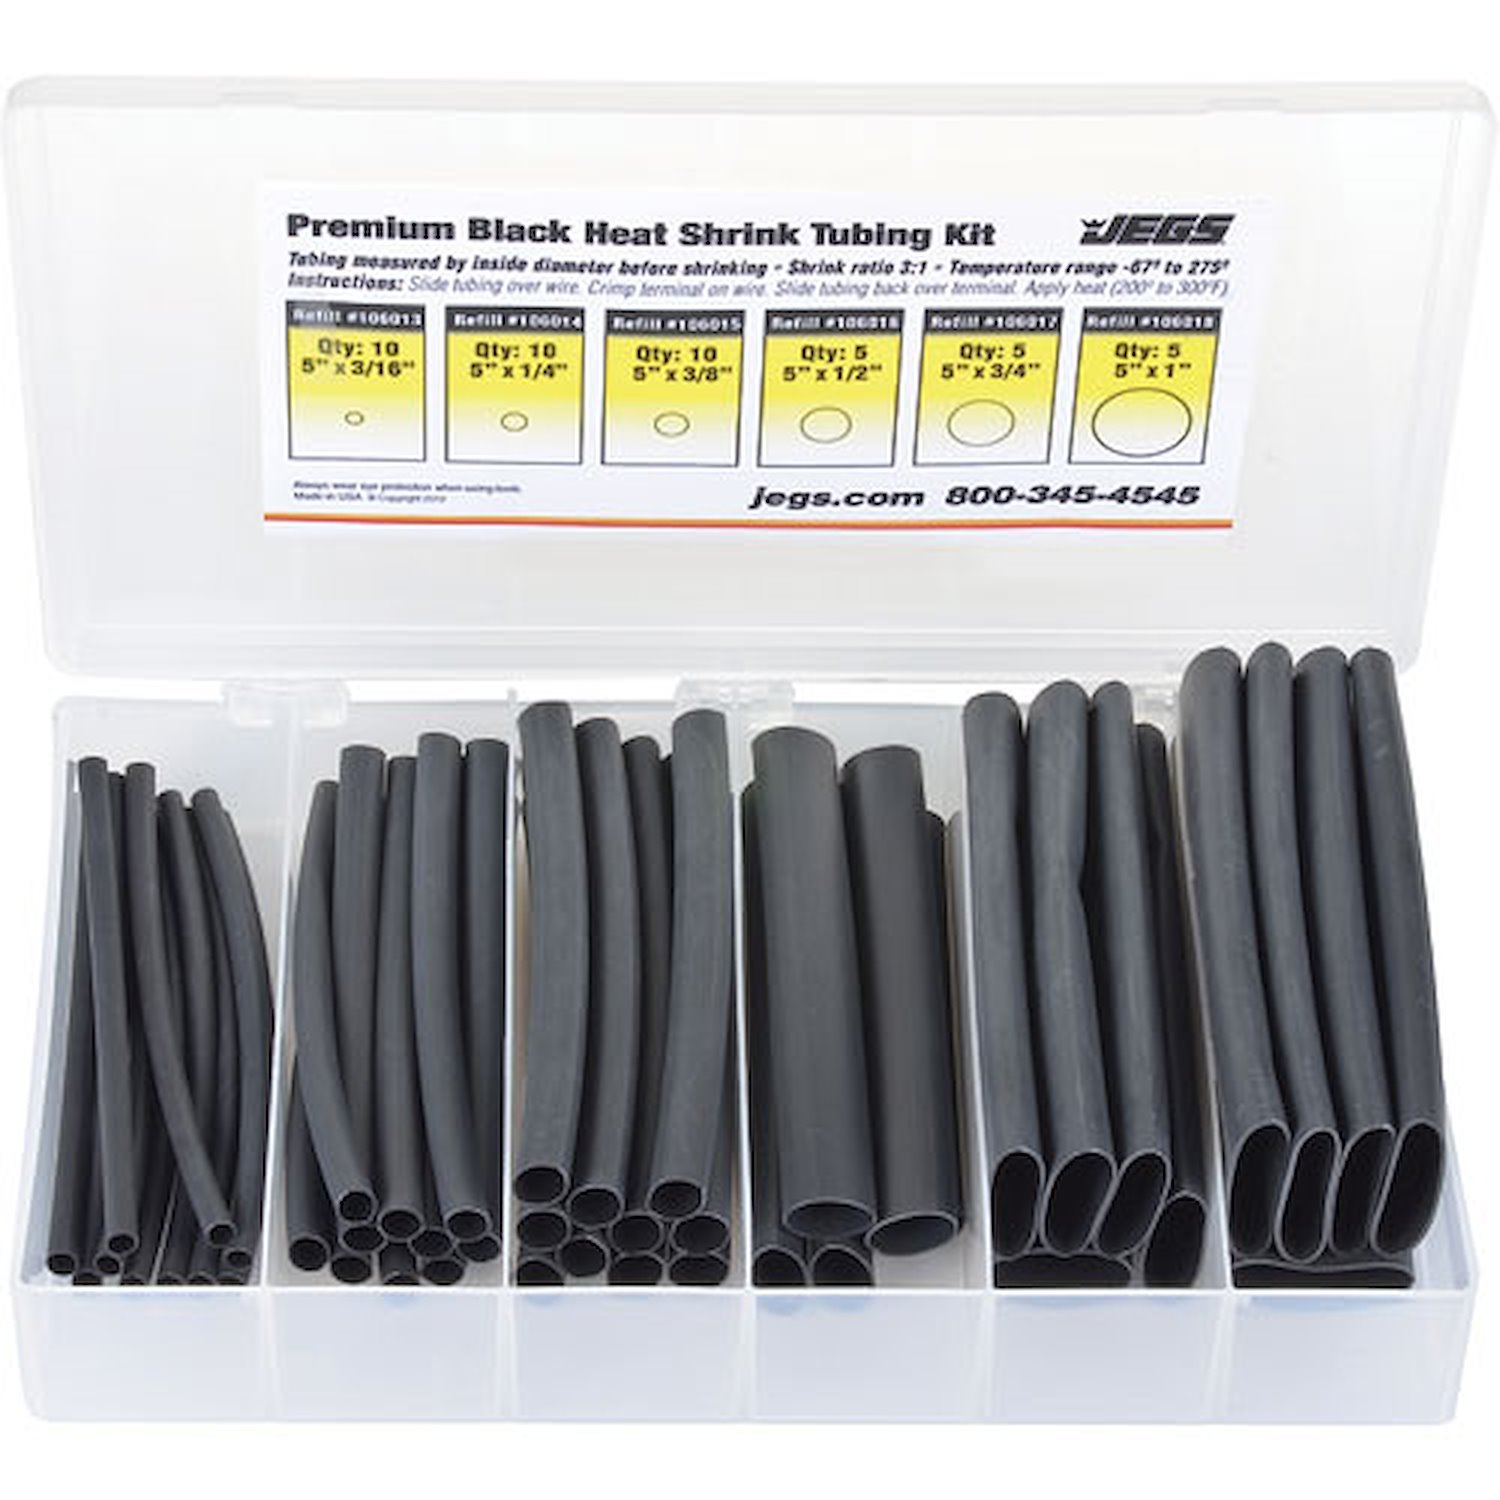 Black Premium Heat Shrink Tubing Kit with Storage